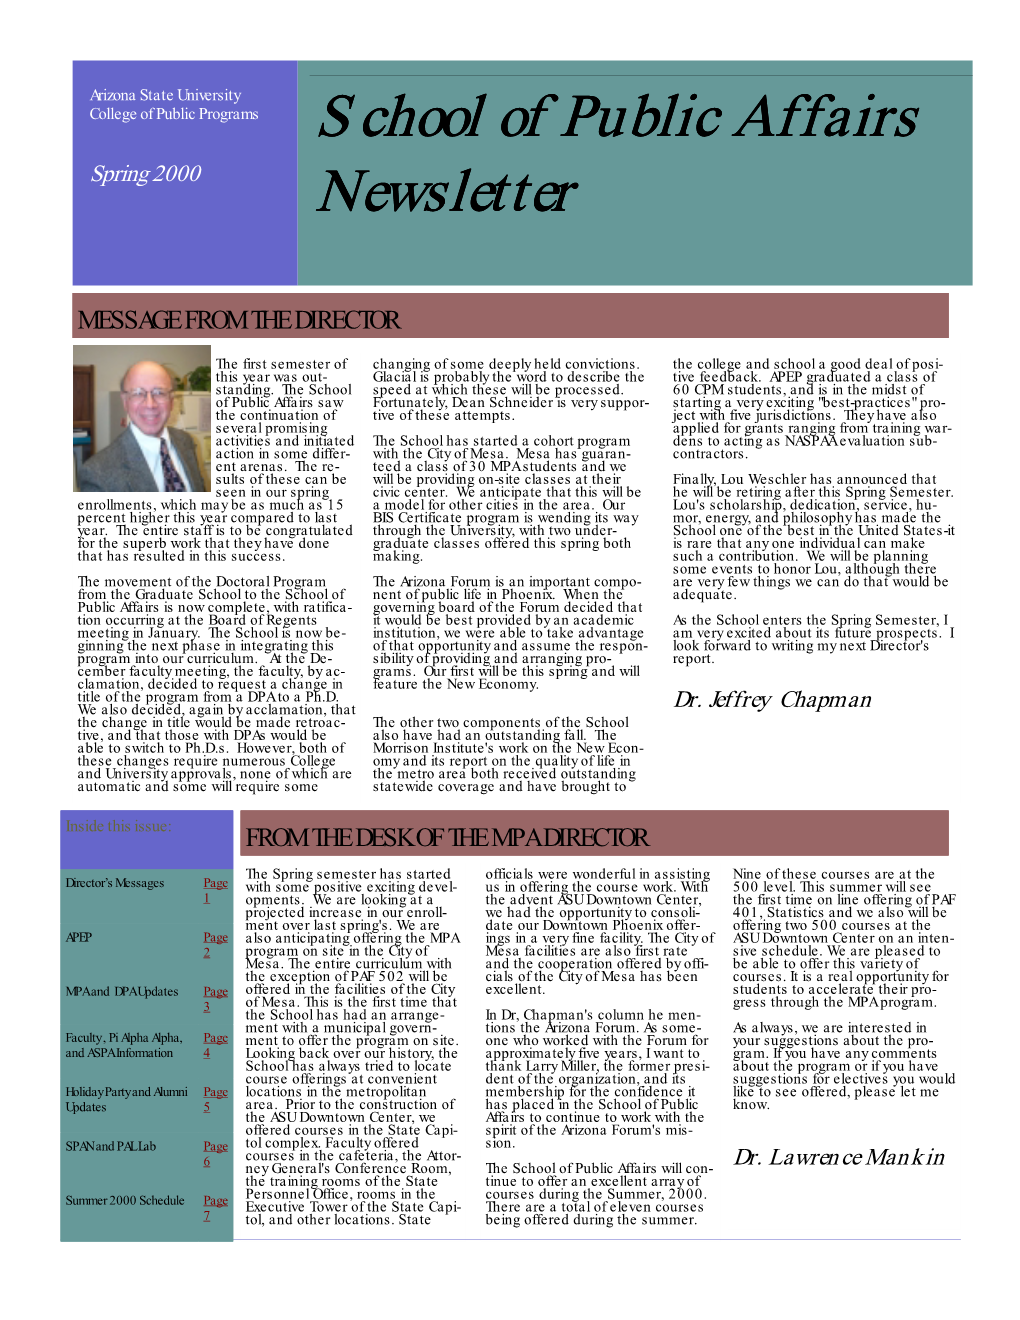 School of Public Affairs Newsletter Newsletter